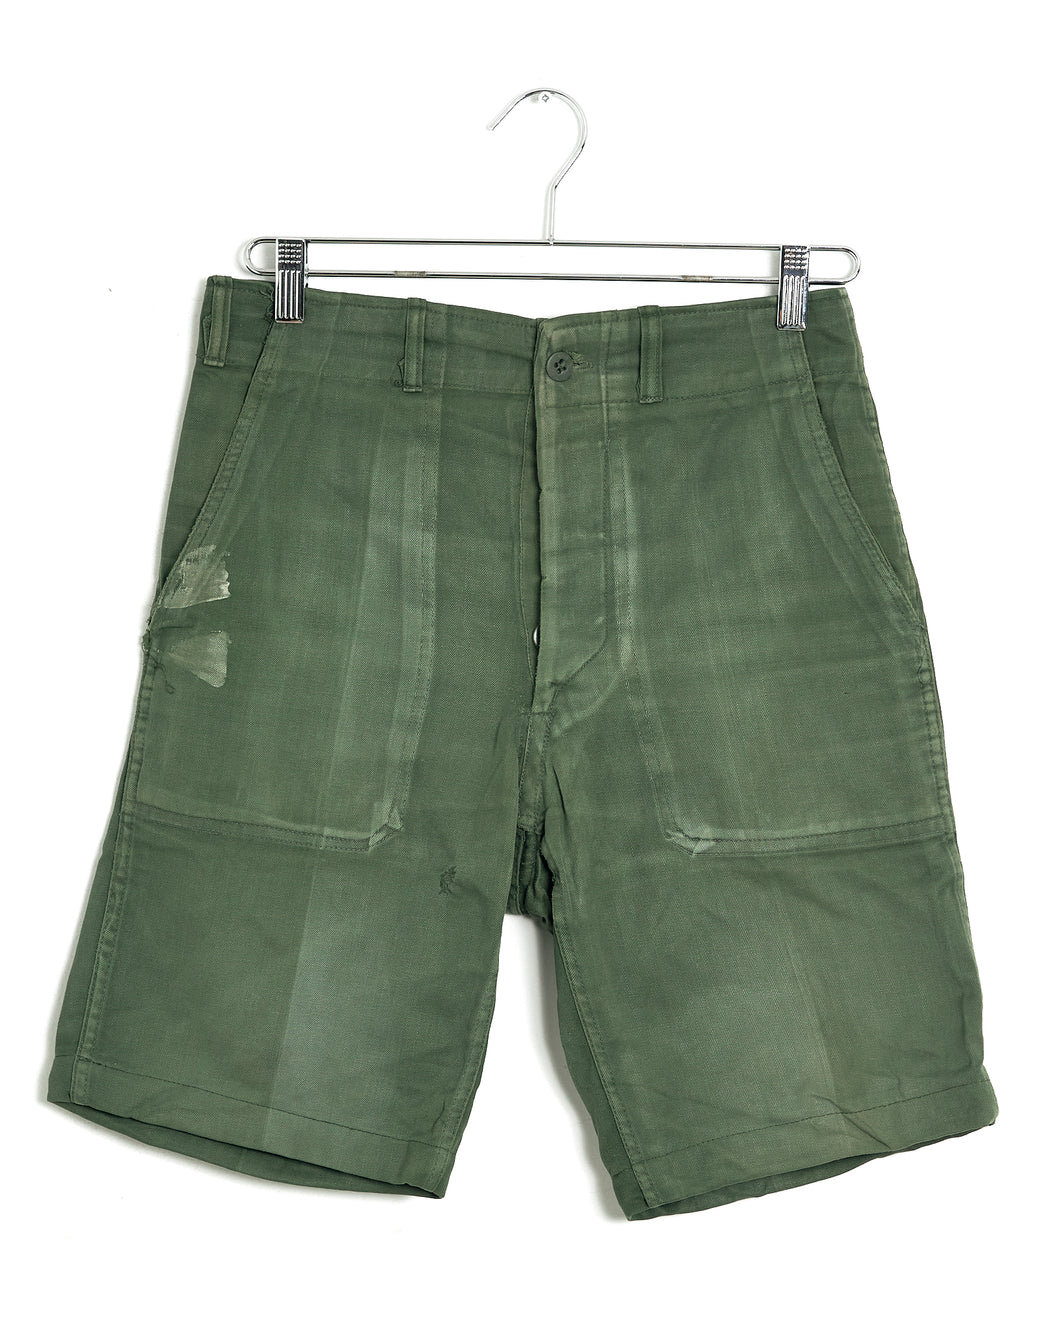 1950s/60s Korean War HBT Shorts - 29